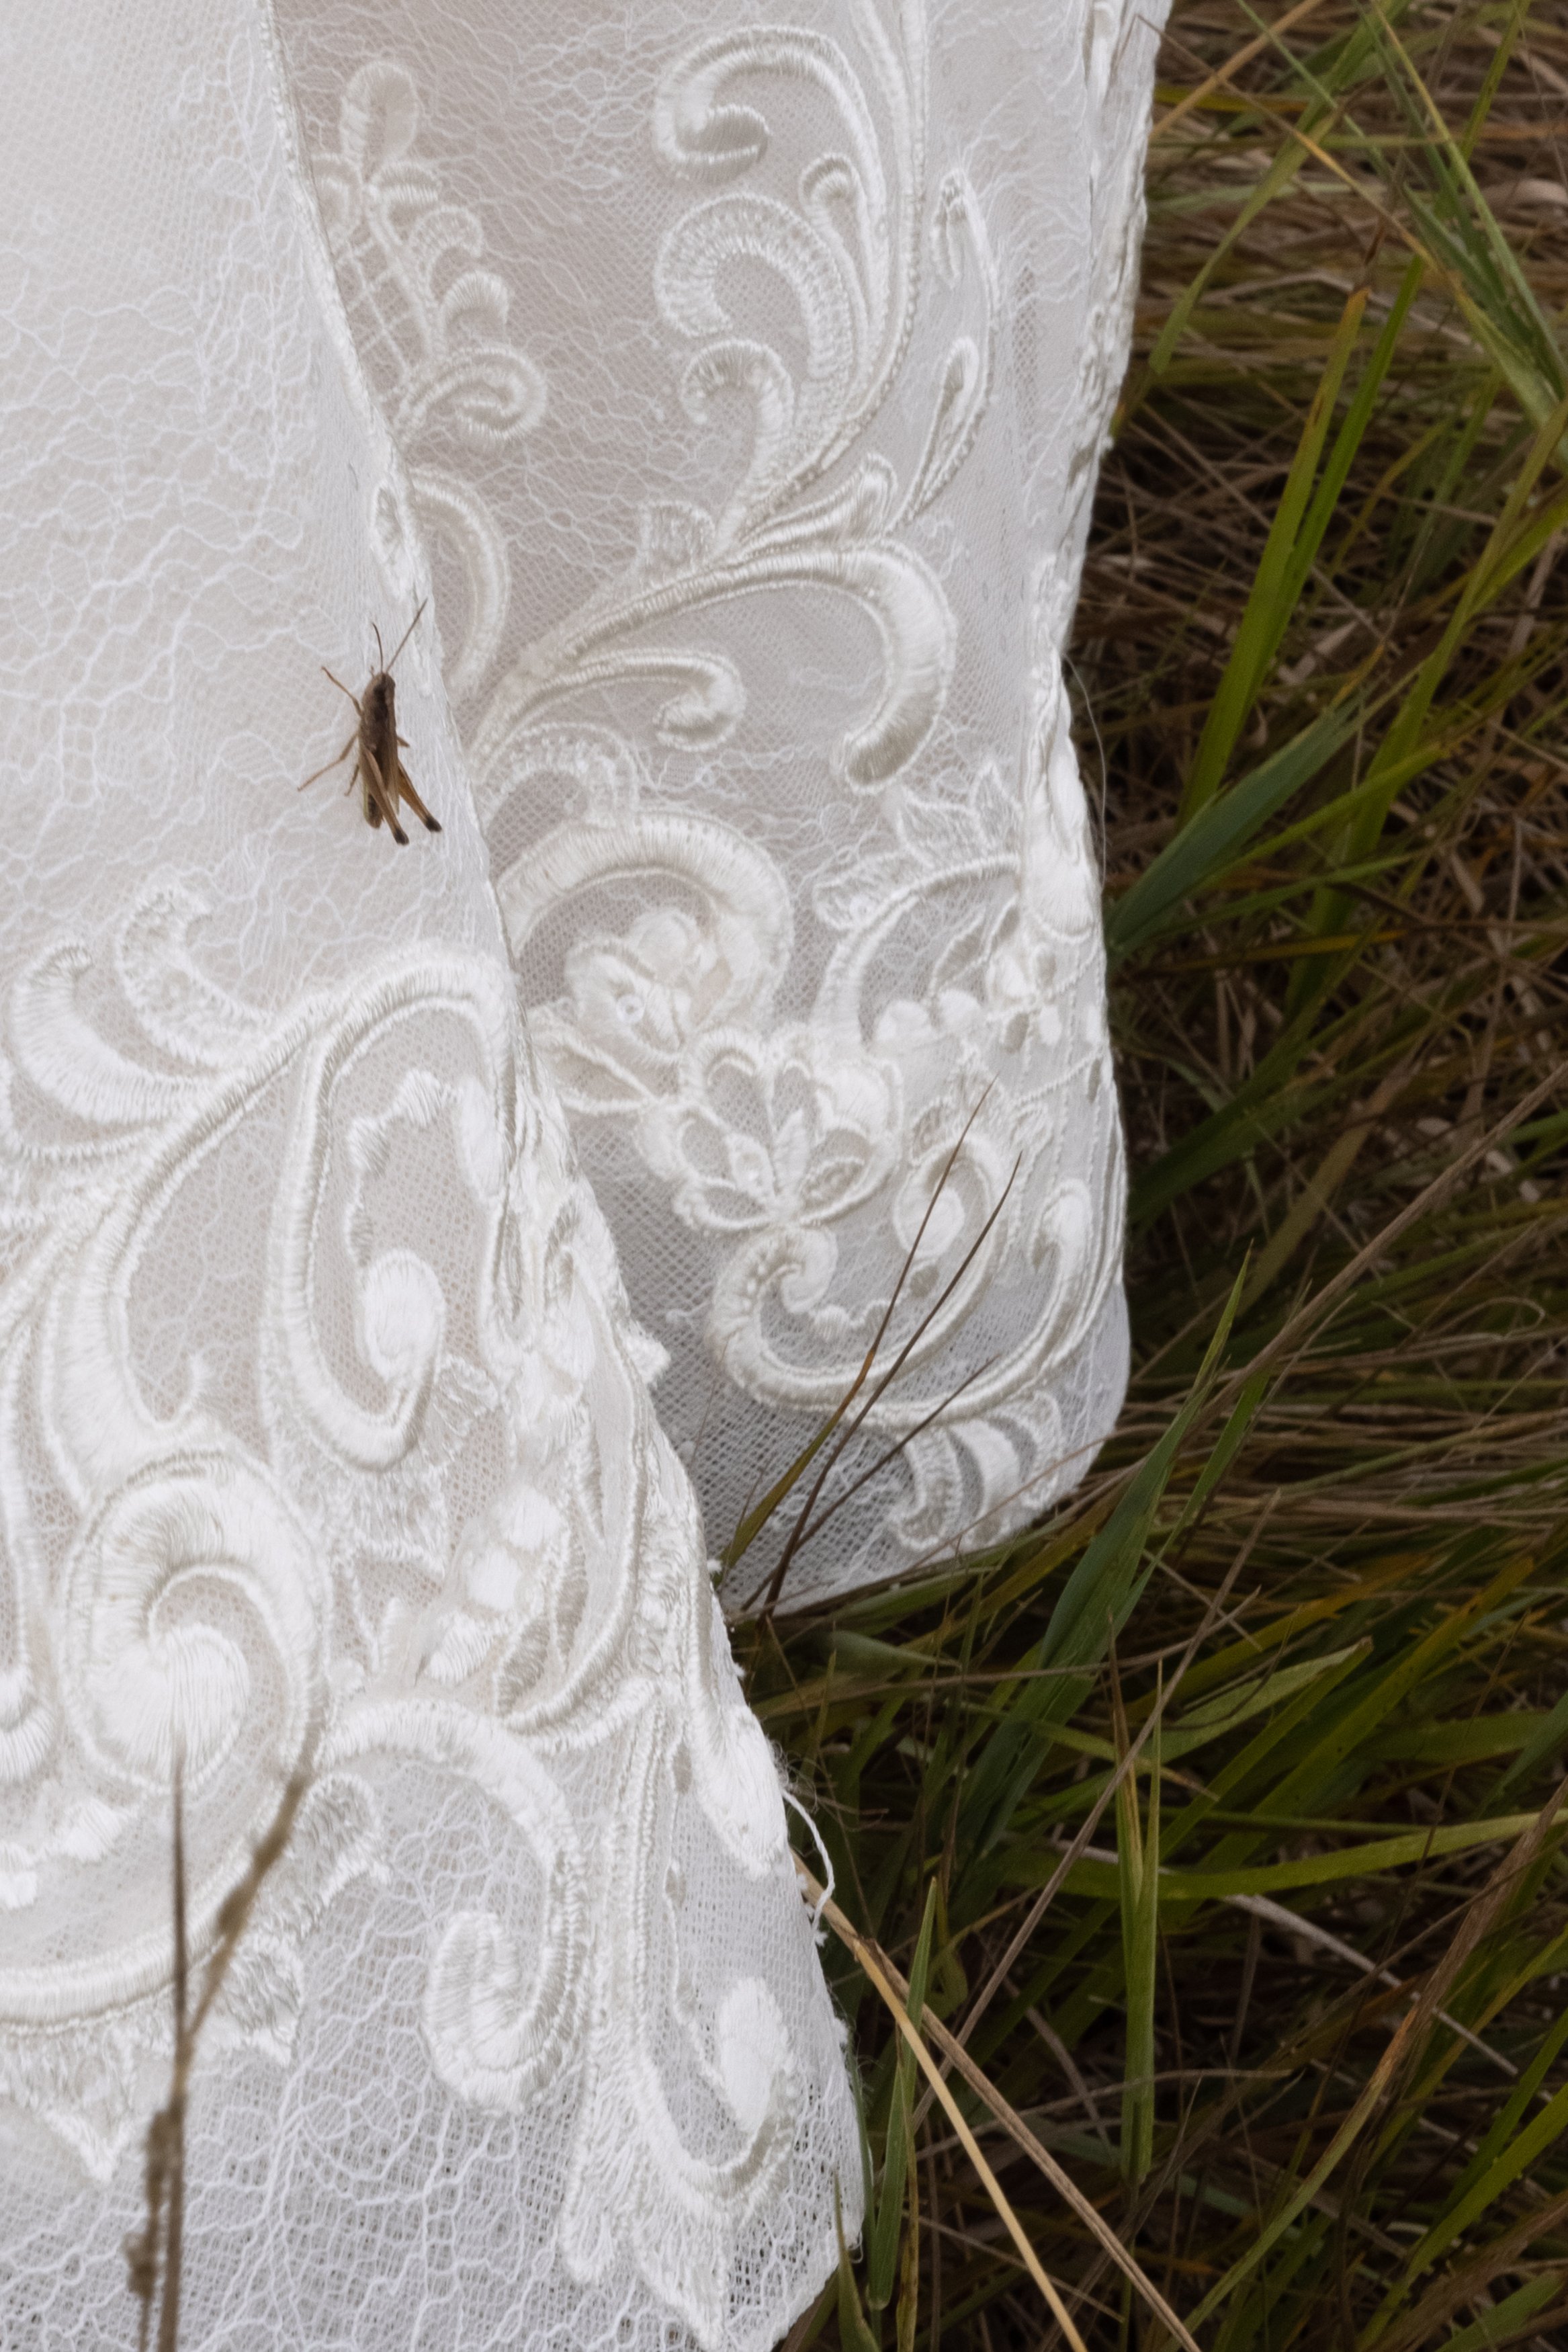 Grasshopper on Bride Dress